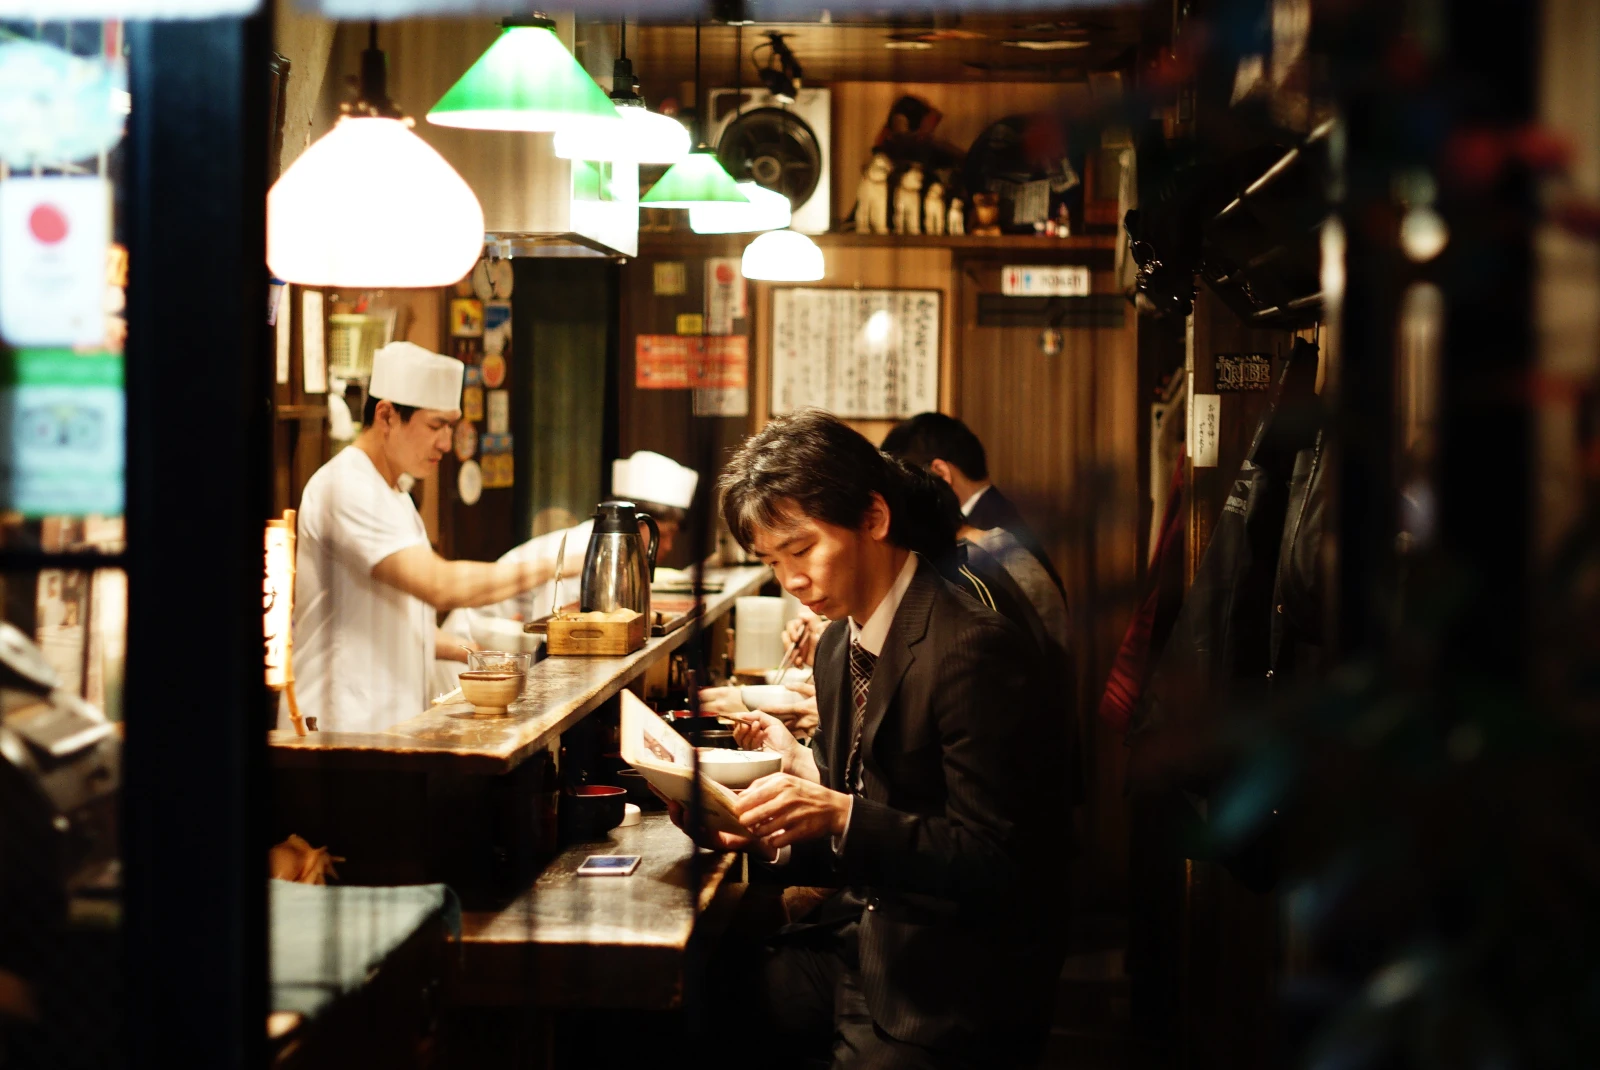 Man sitting at restaurant bar under bright lights with chef in white hat preparing food